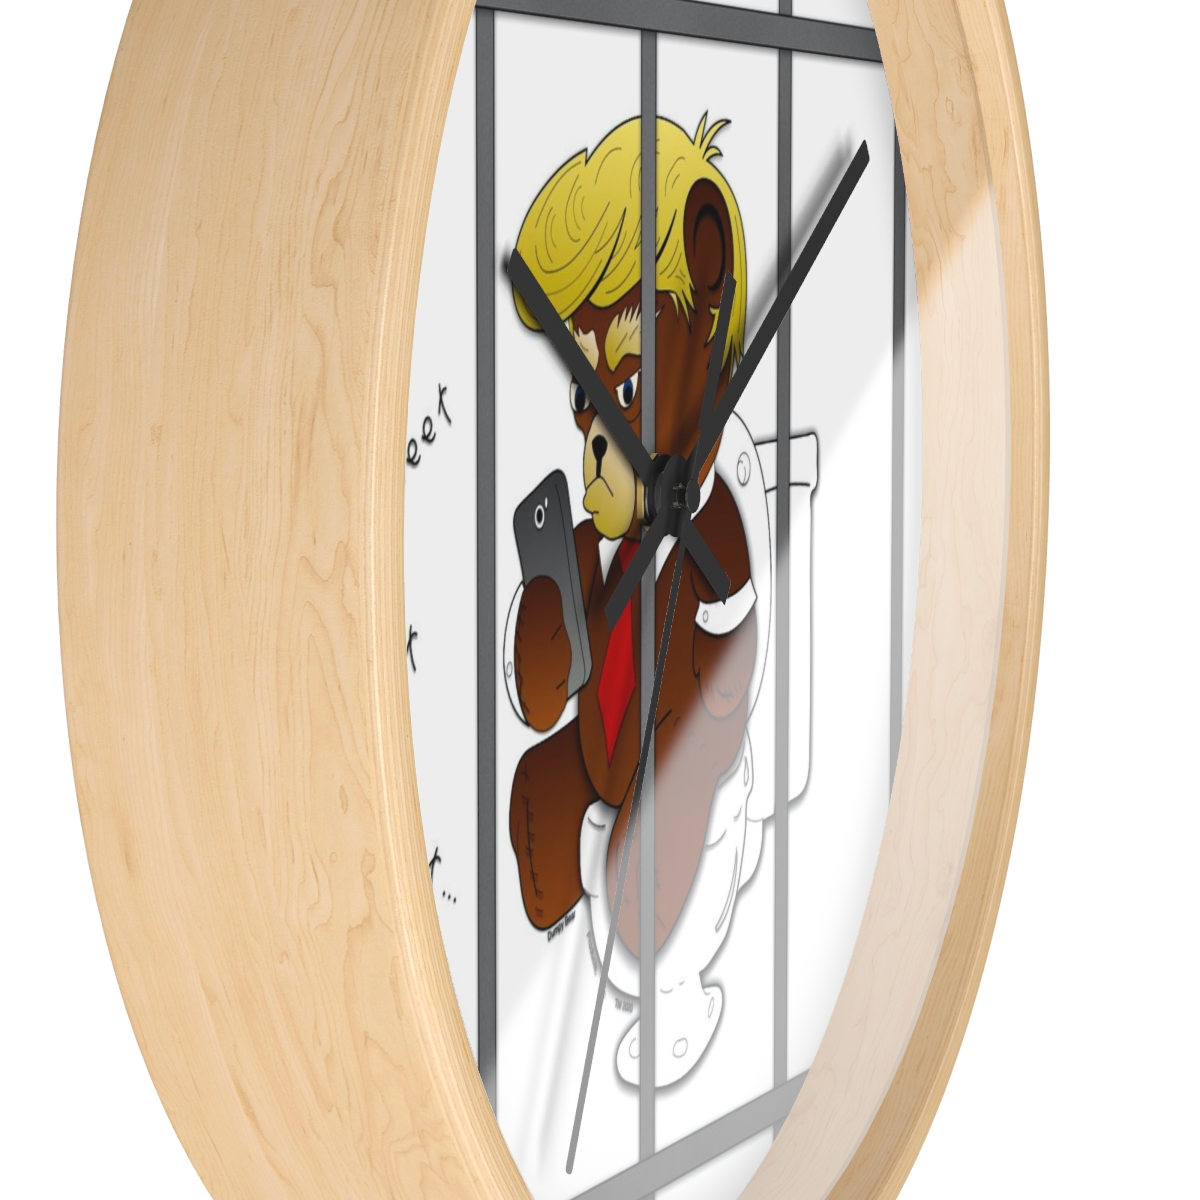 Dumpy Bear Tweeting on Toilet Behind Bars - Wall Clock product thumbnail image